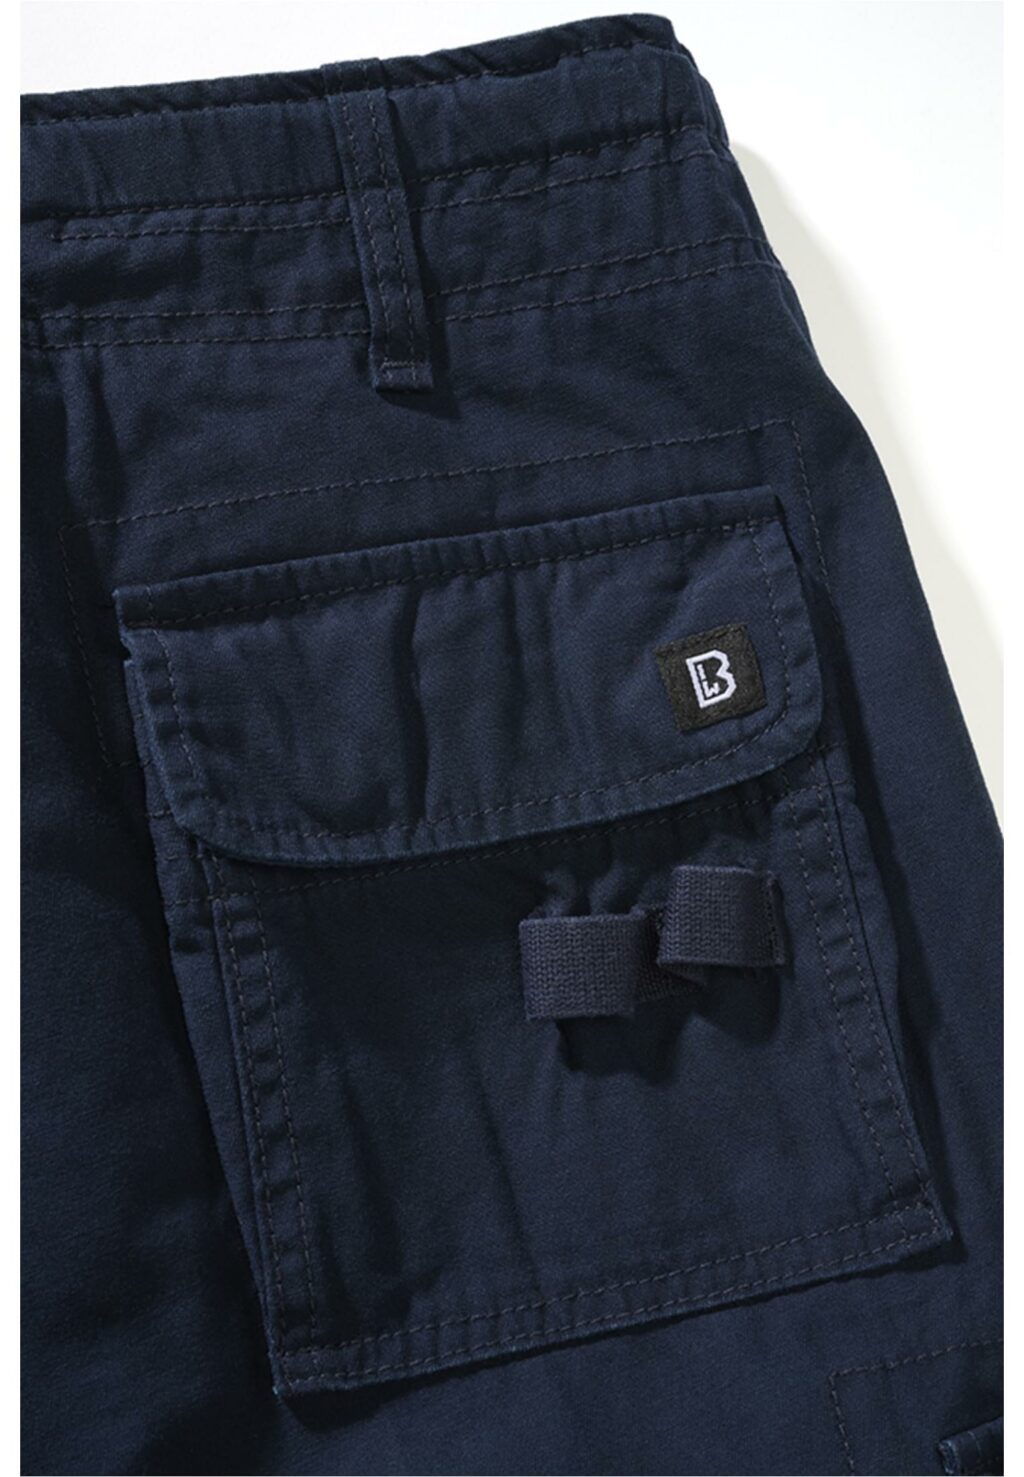 Brandit Pure Slim Fit Trouser navy BD1016